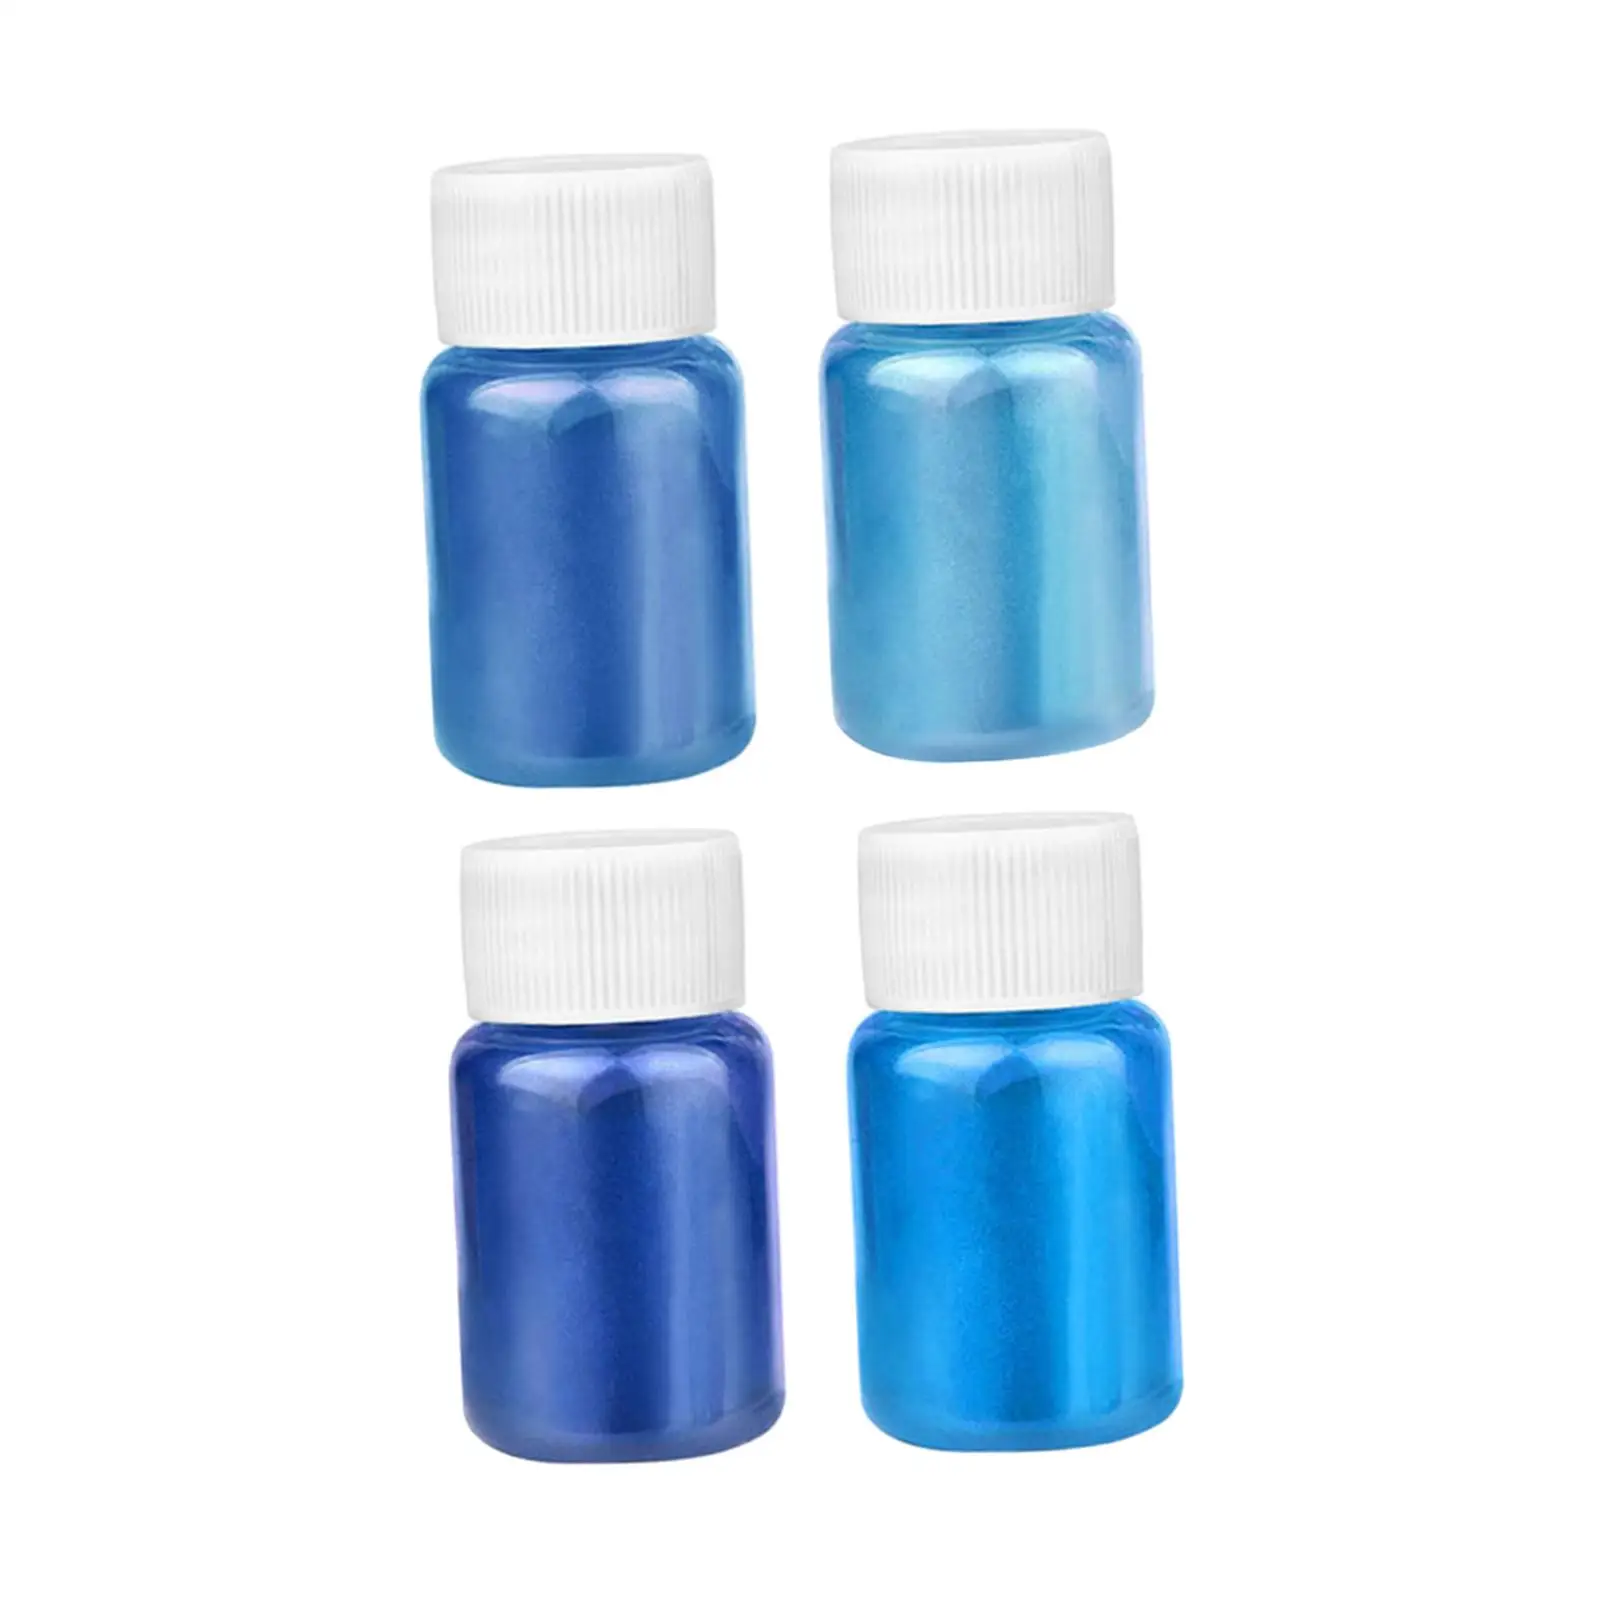 4Pcs Mica Powder Colors Resin Glue Pigments Material Powder Pigment Powder for Jewelry Nail Bath Balls Paint Soap Making